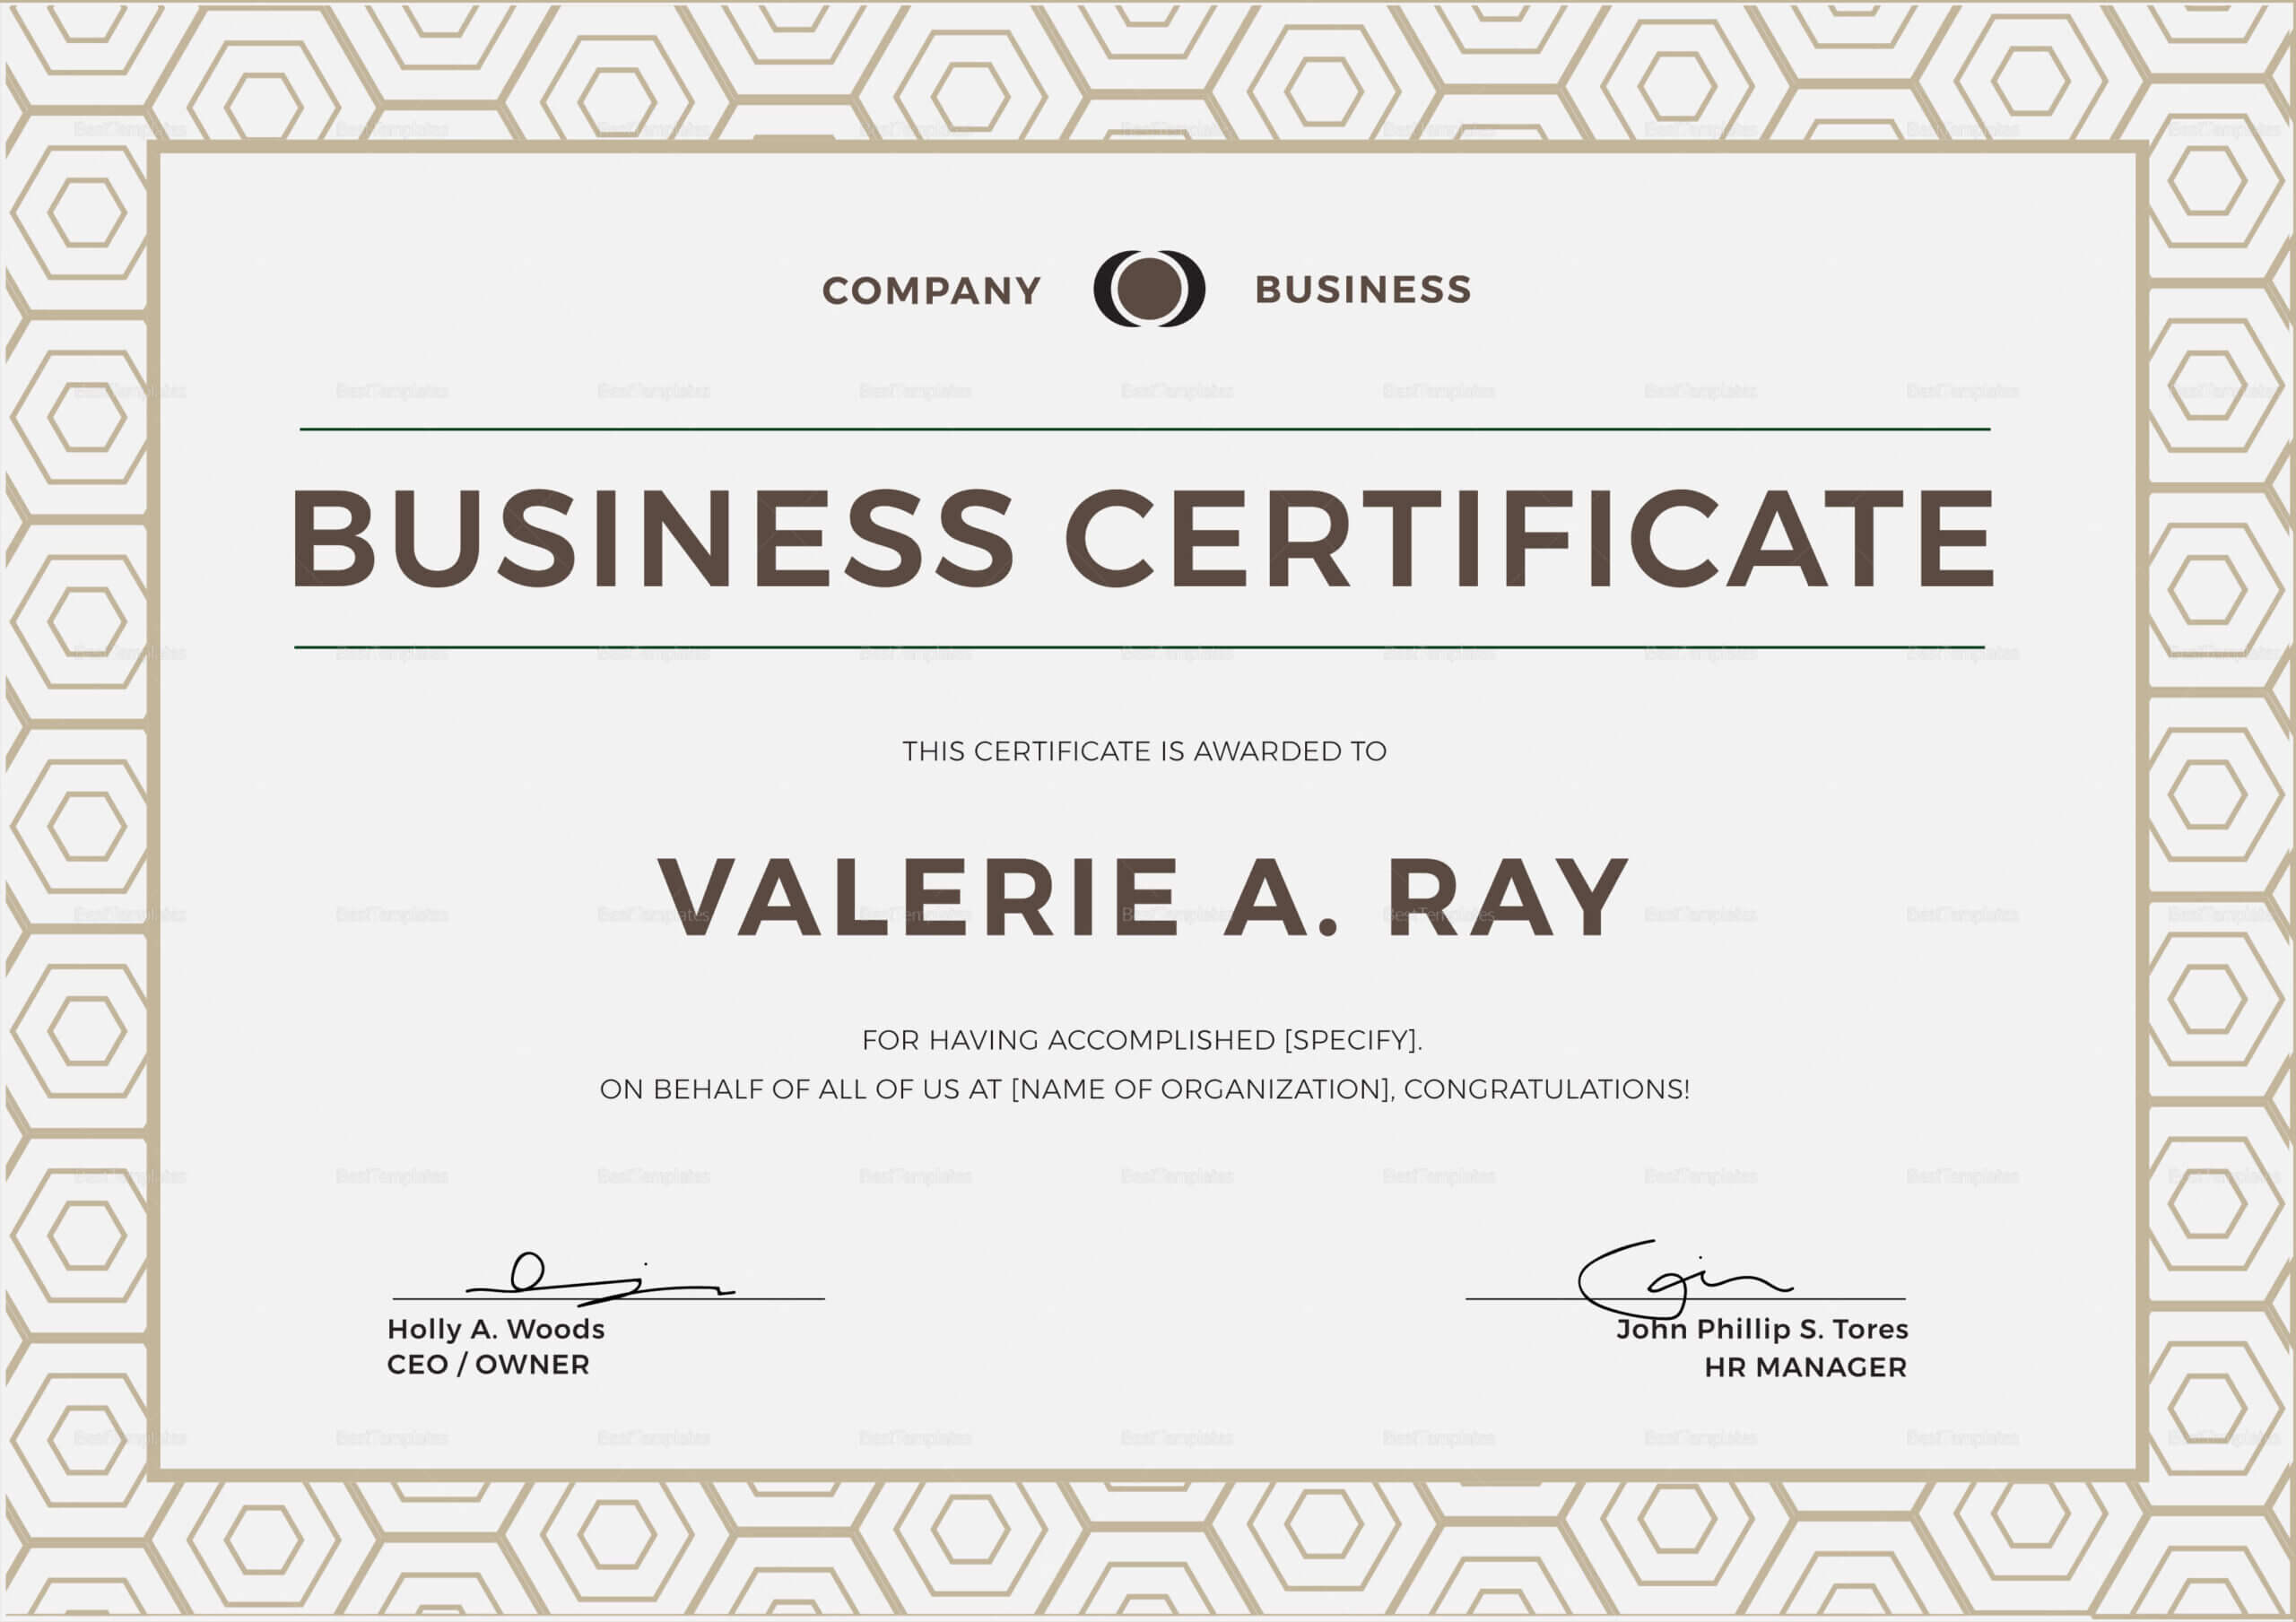 Business Certificate Sample Calep midnightpig co Regarding